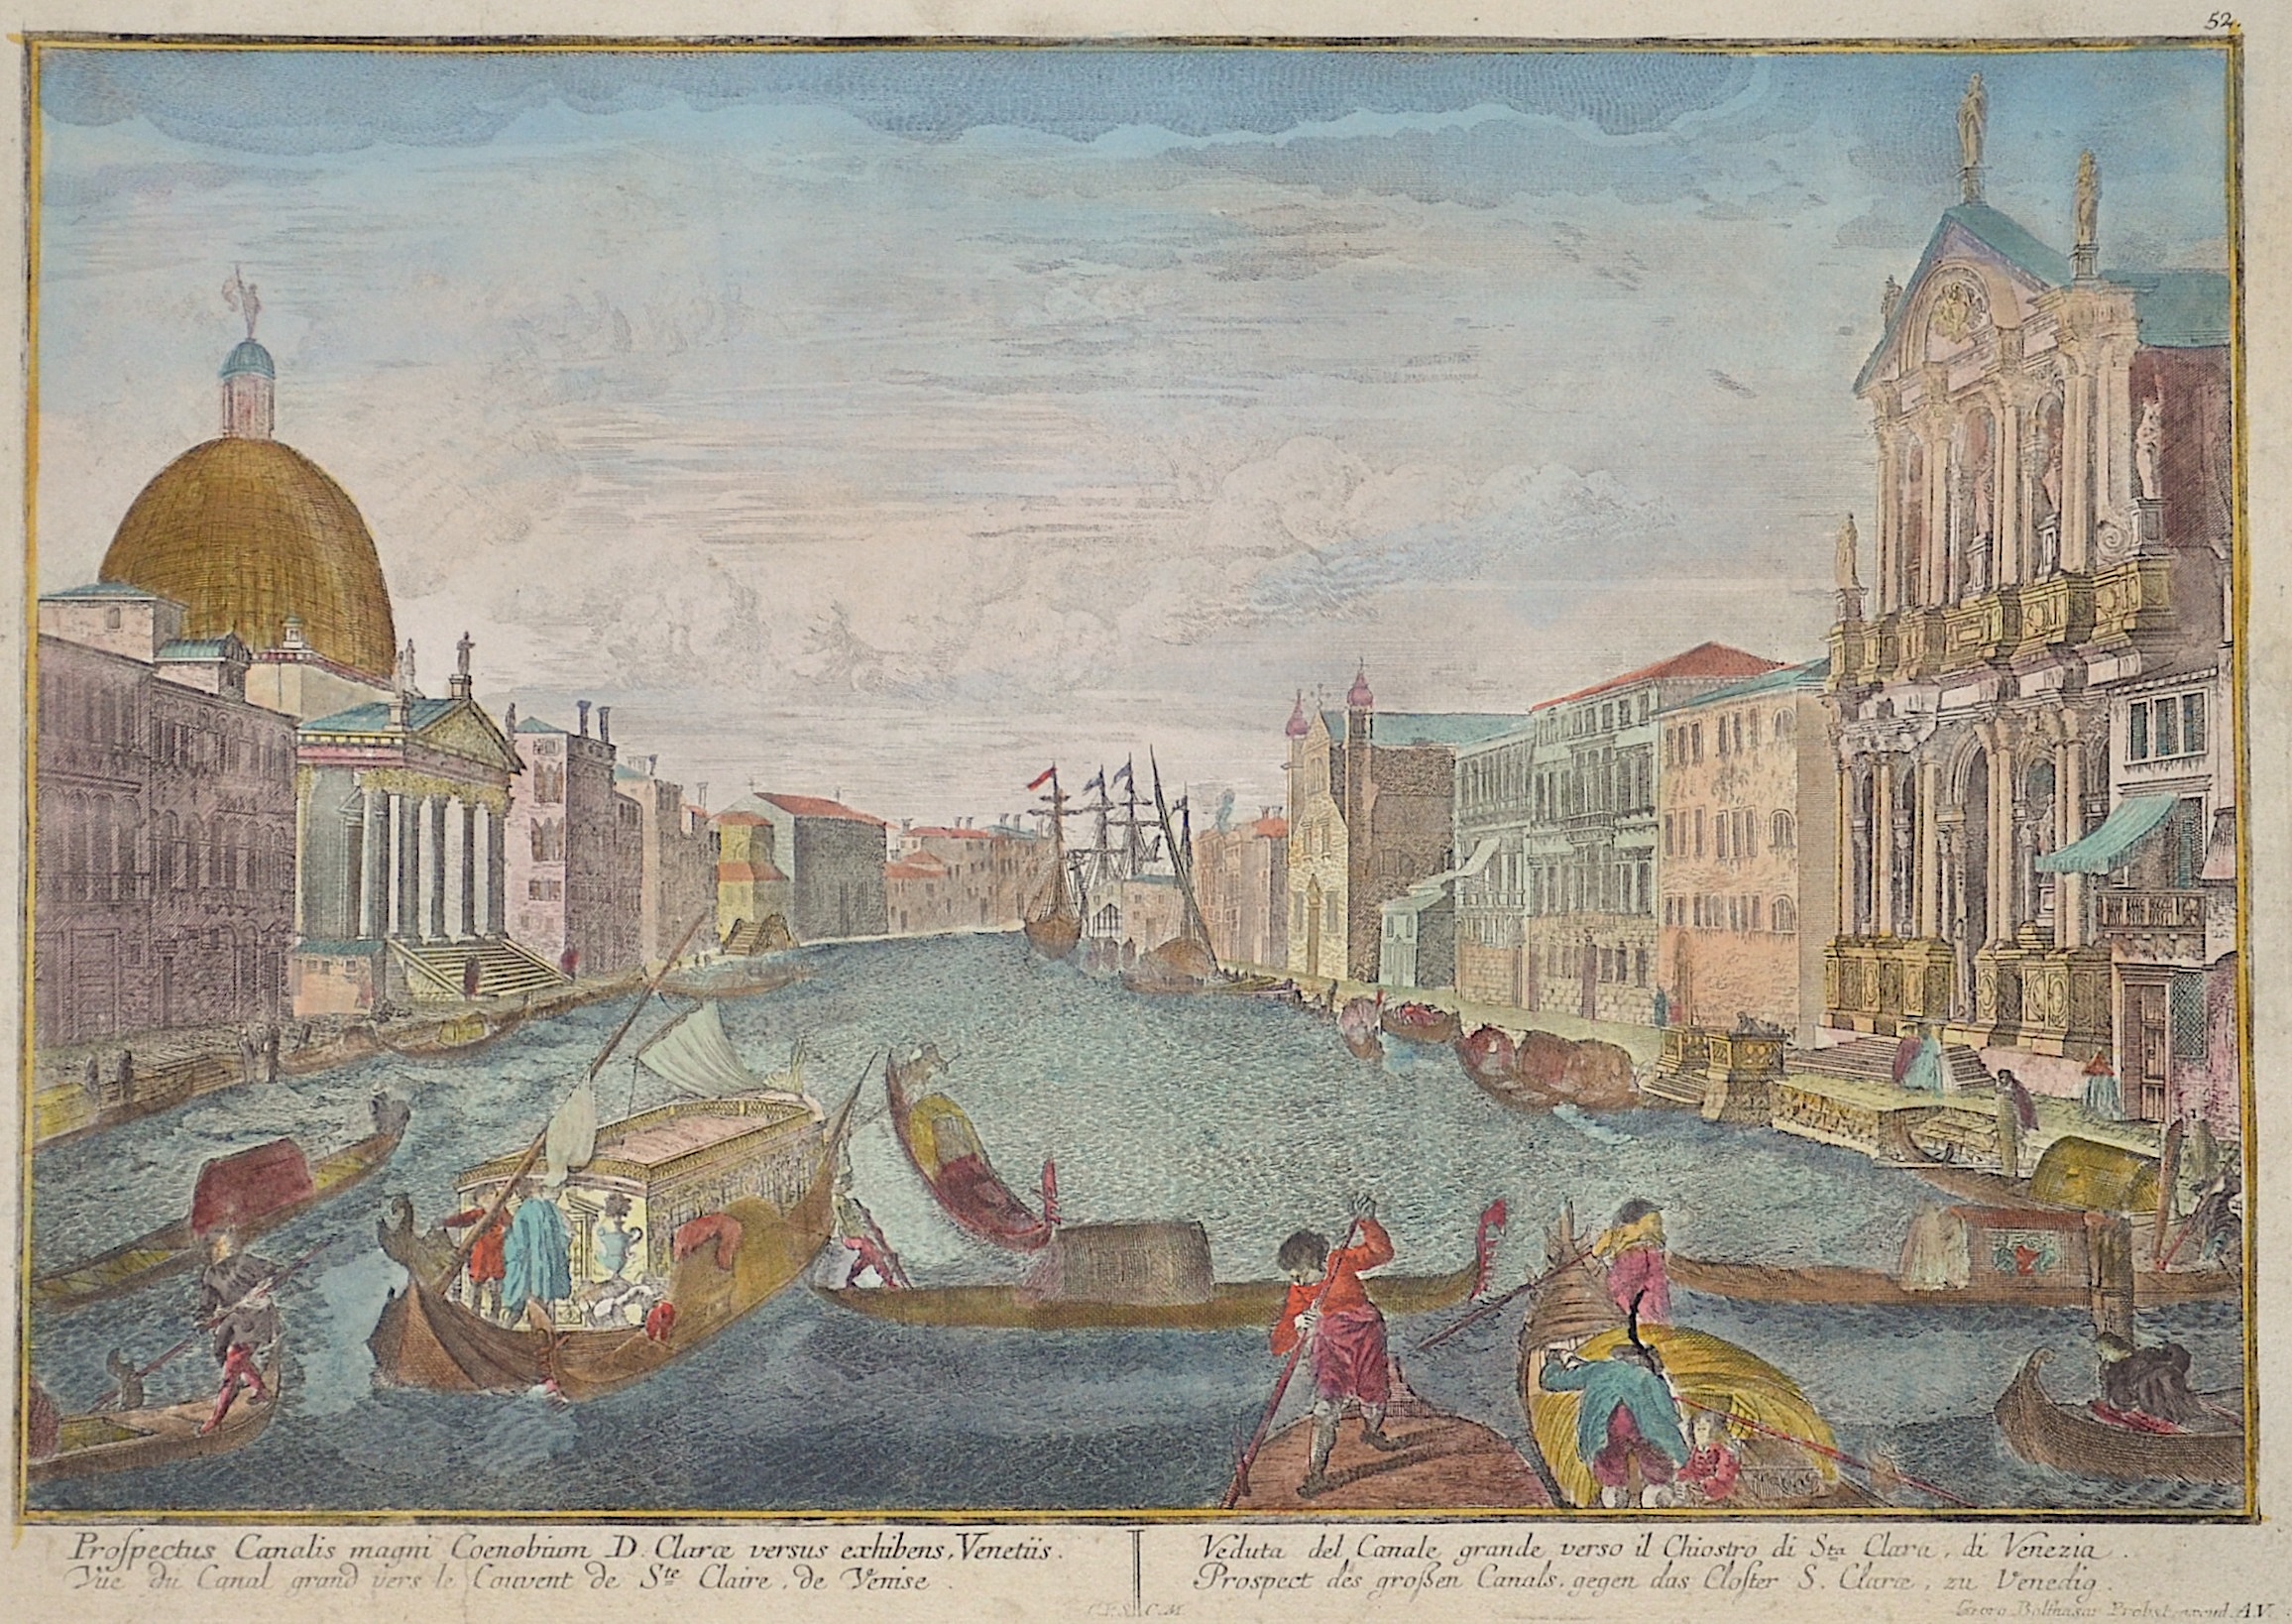 Probst  Prospectus Canalis magni Coenubium D.Calarae versus exhibens, Venetiis/Prospect des großen Kanals gegen das Kloster S.Clara zuu Venedig